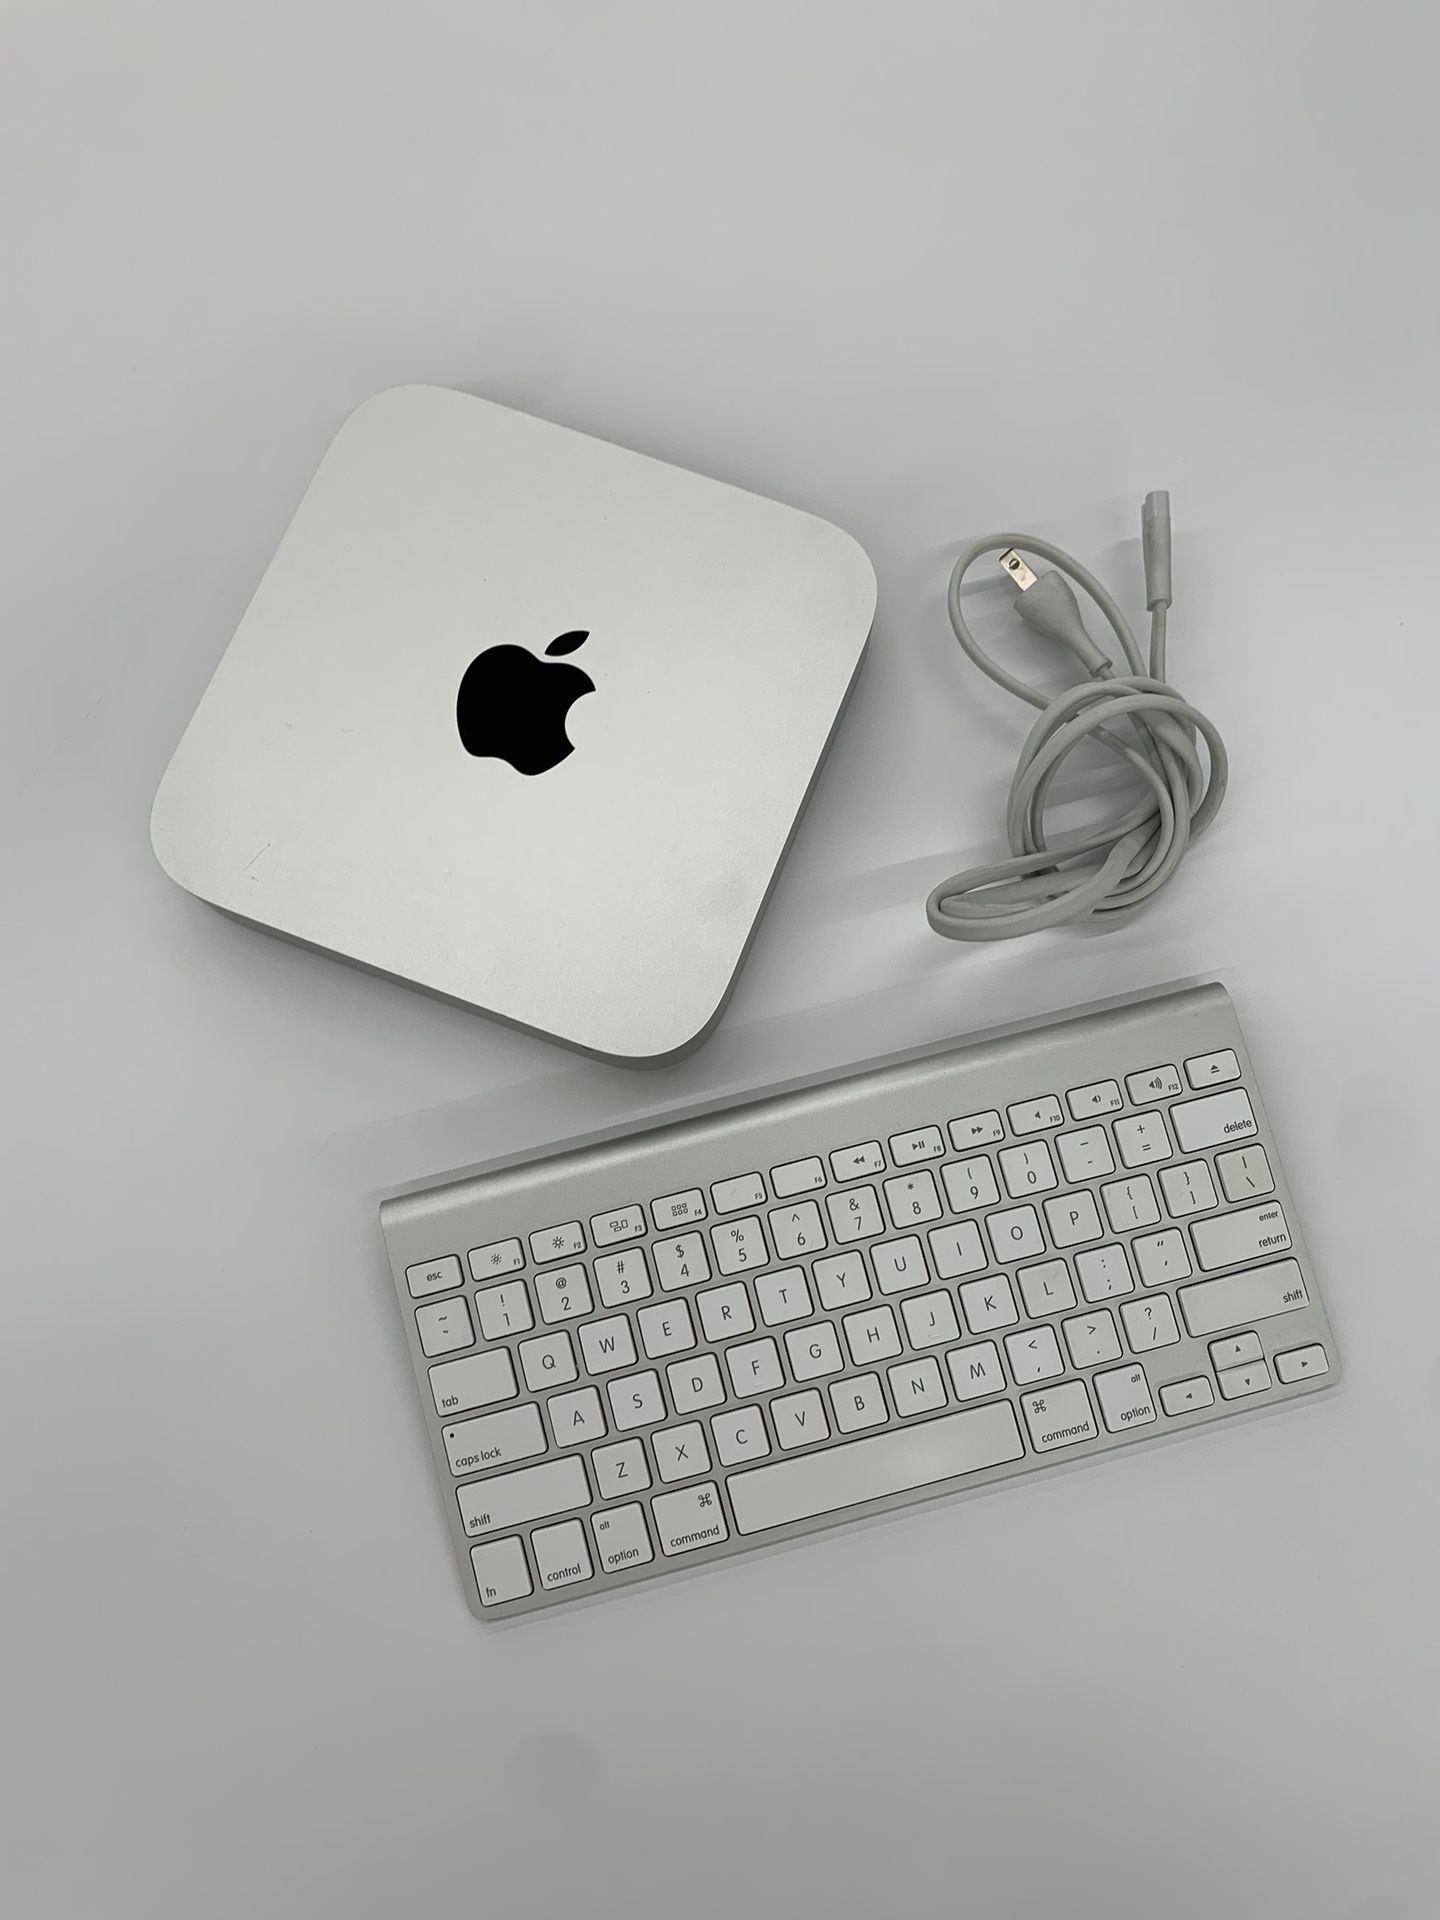 Mac Mini late 2014 2.6Ghz i5 8GB RAM 1TB HDD plus keyboard!